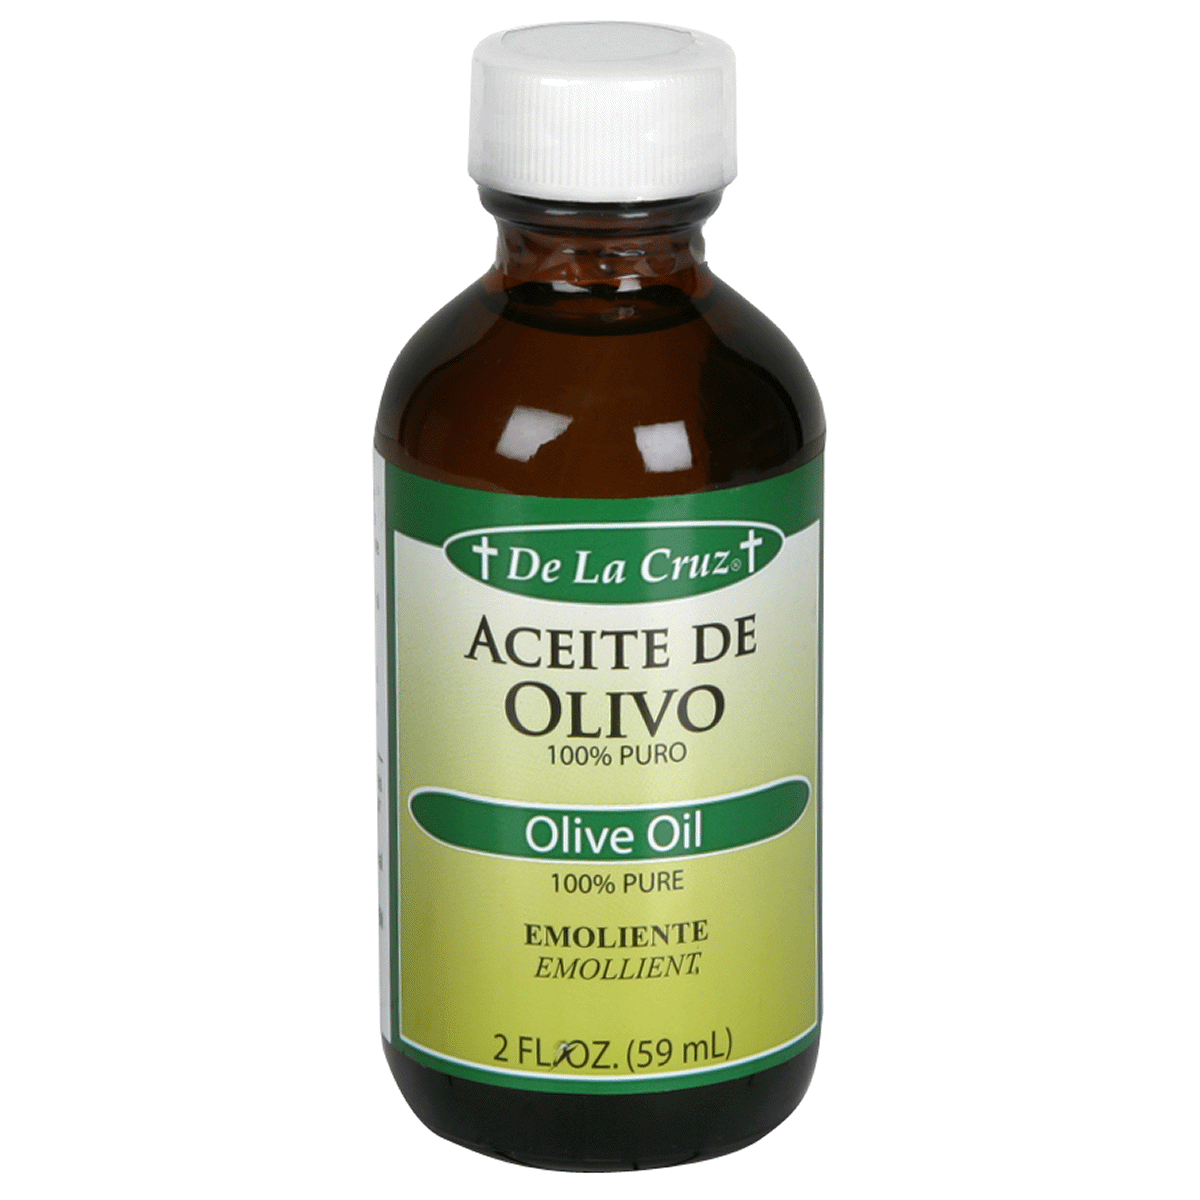 slide 1 of 1, De la Cruz Aceite De Olivo Olive Oil, 2 fl oz